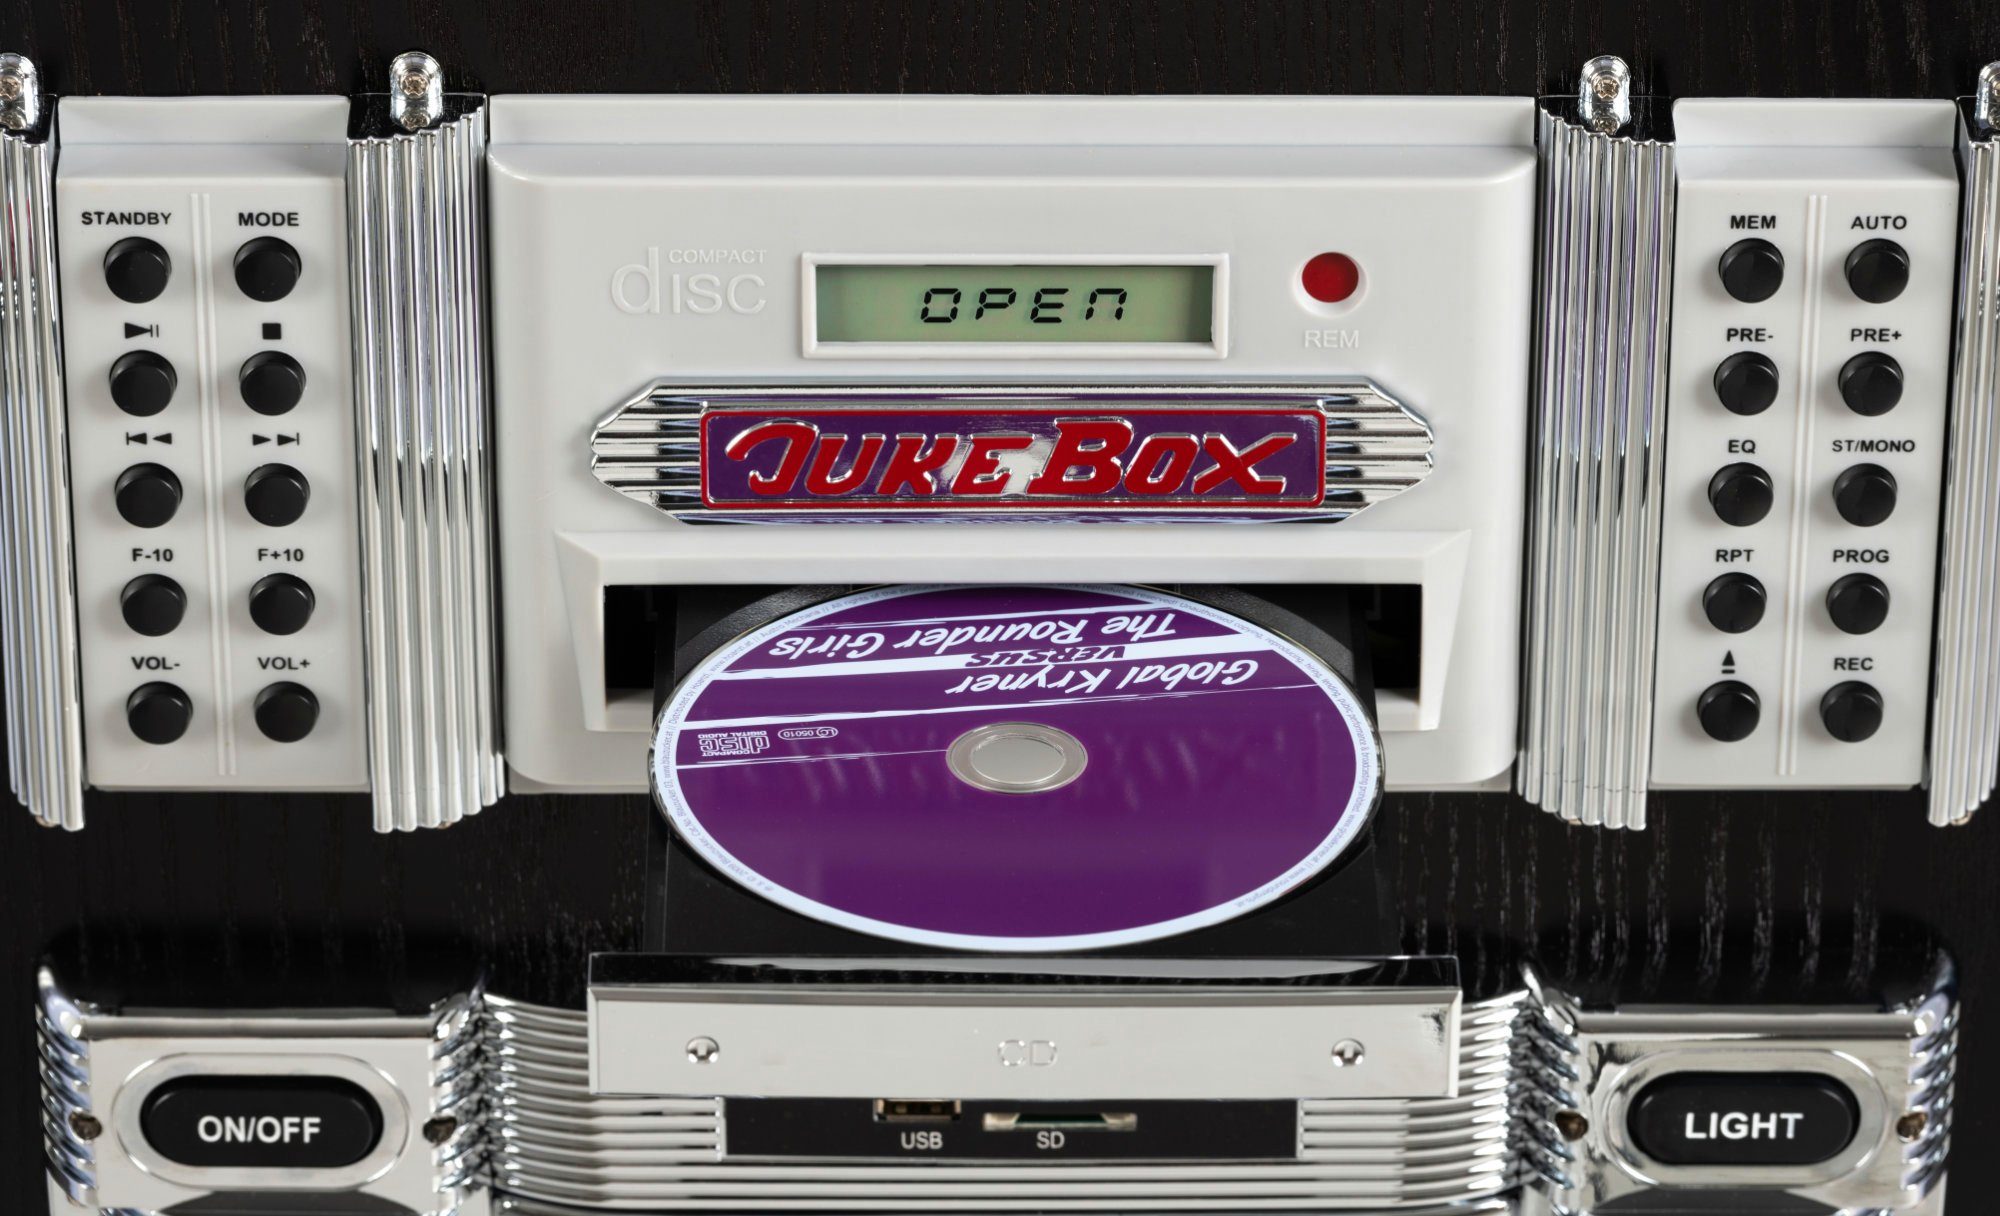 GoldenAge Jukebox W, Retro (UKW/MW-Radio, AUX) Stereoanlage 60 USB-SD, CD-Player, Bluetooth, 40er/50er Musikbox LED-Beleuchtung, Beatfoxx mit Jahre